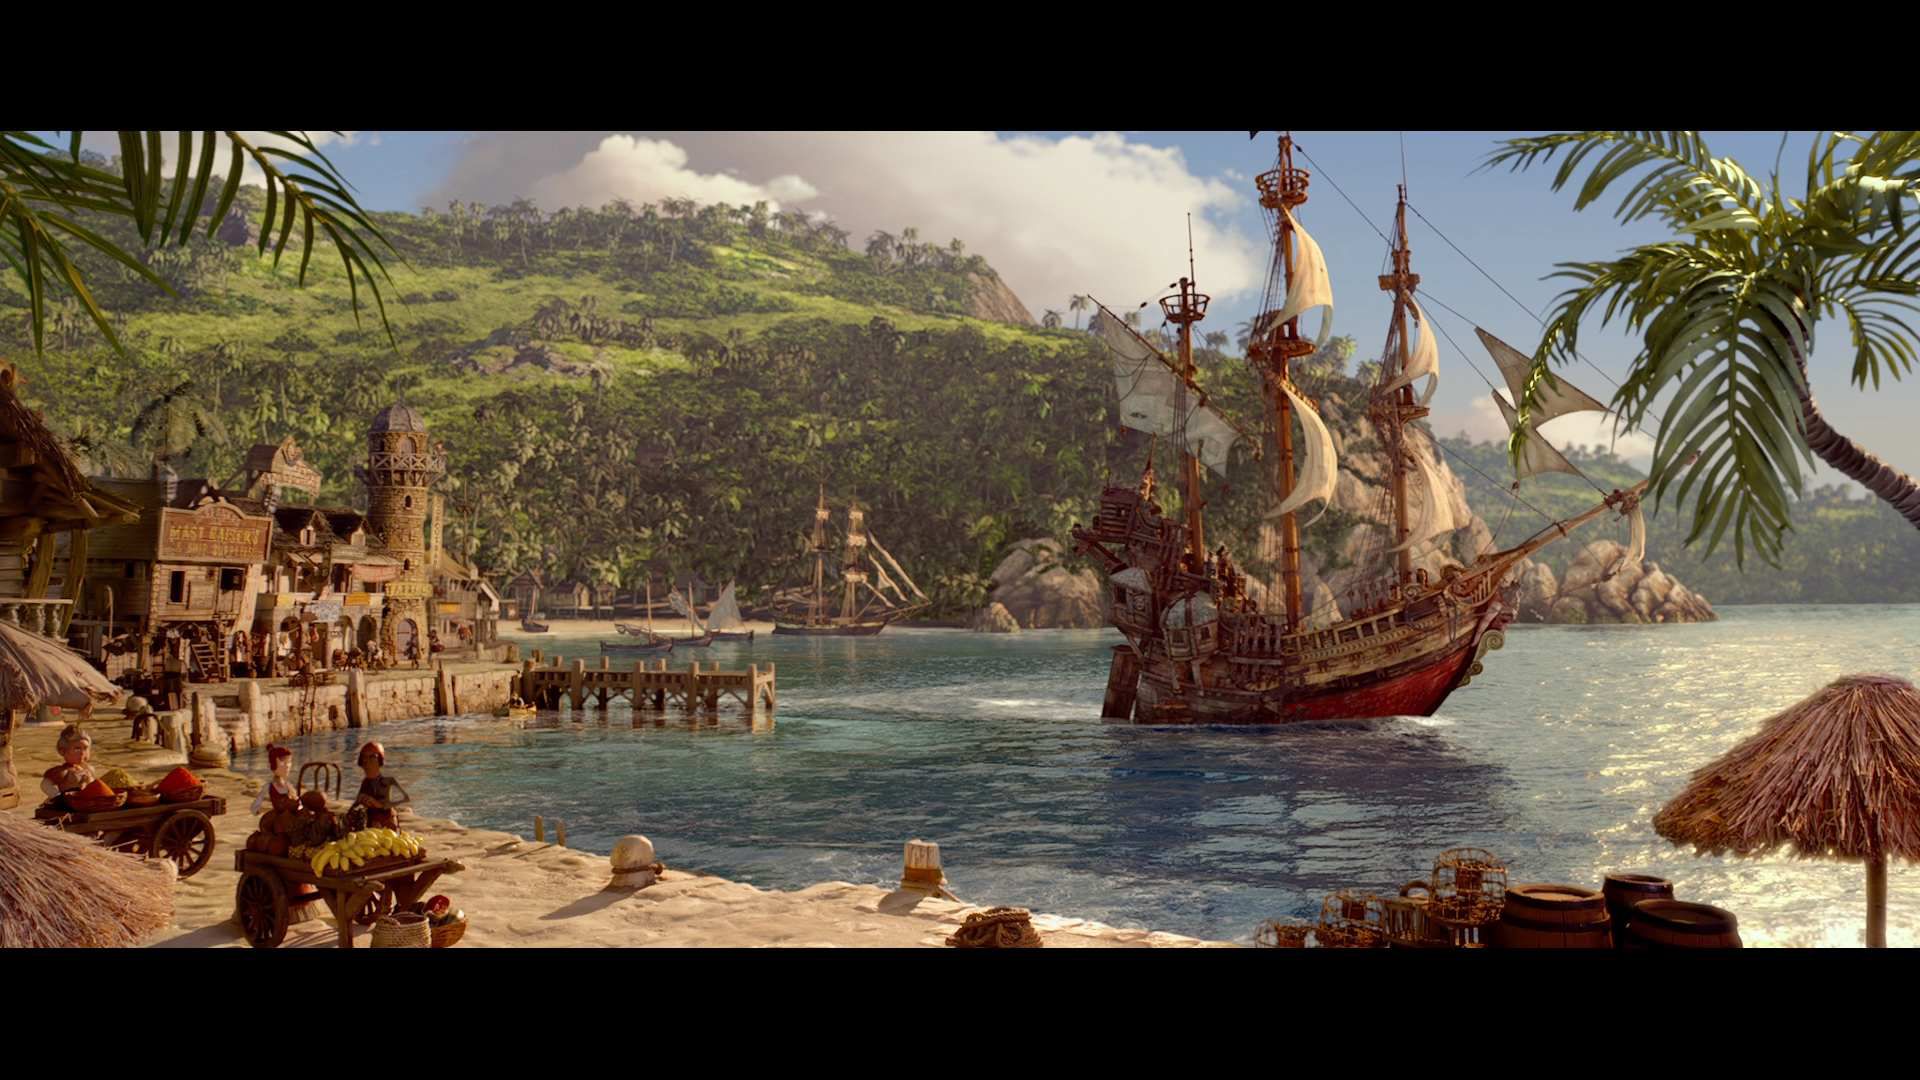 Пиратский корабль в бухте